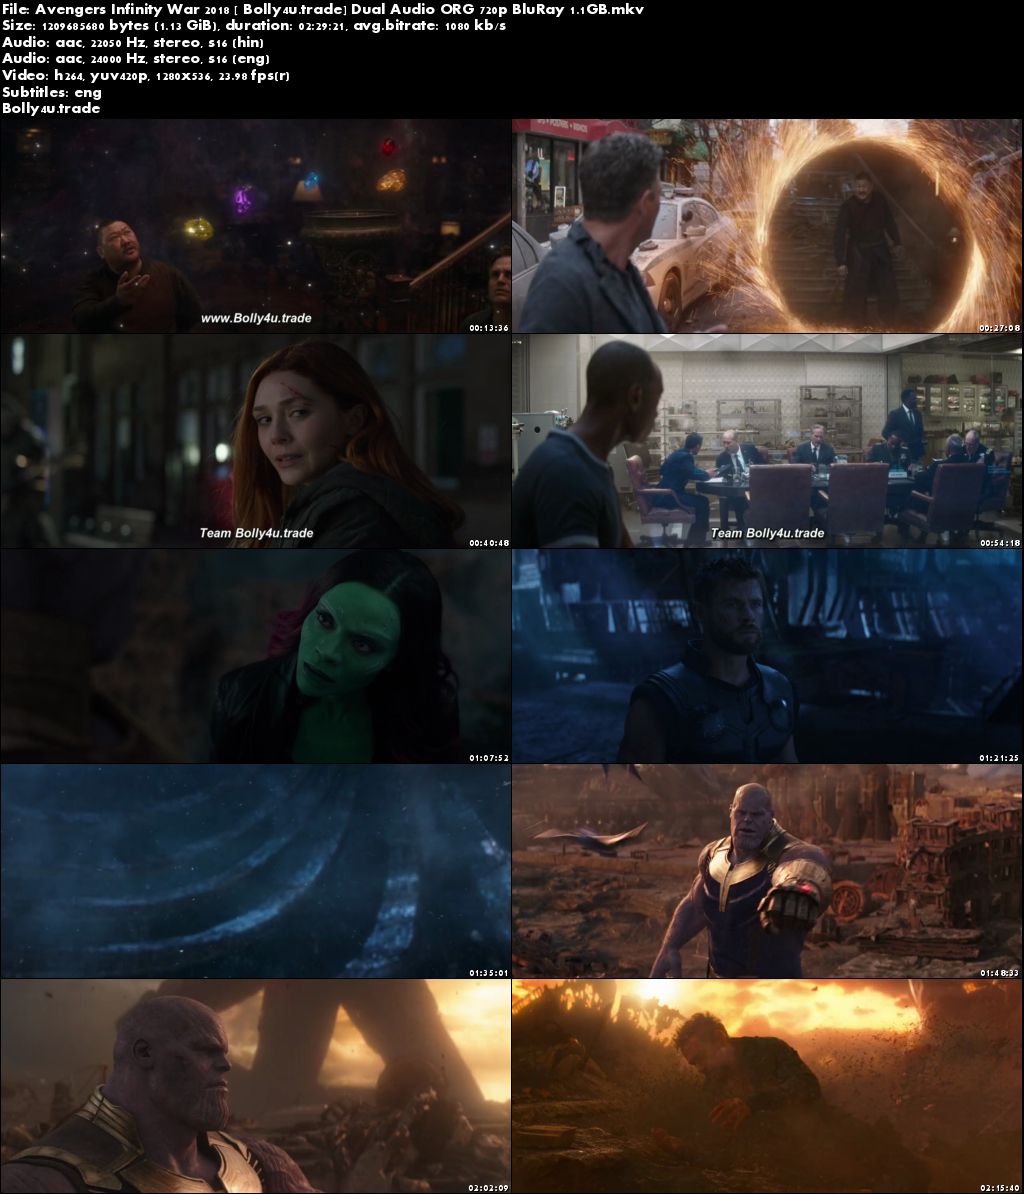 avengers infinity war torrent free download 720p bluray